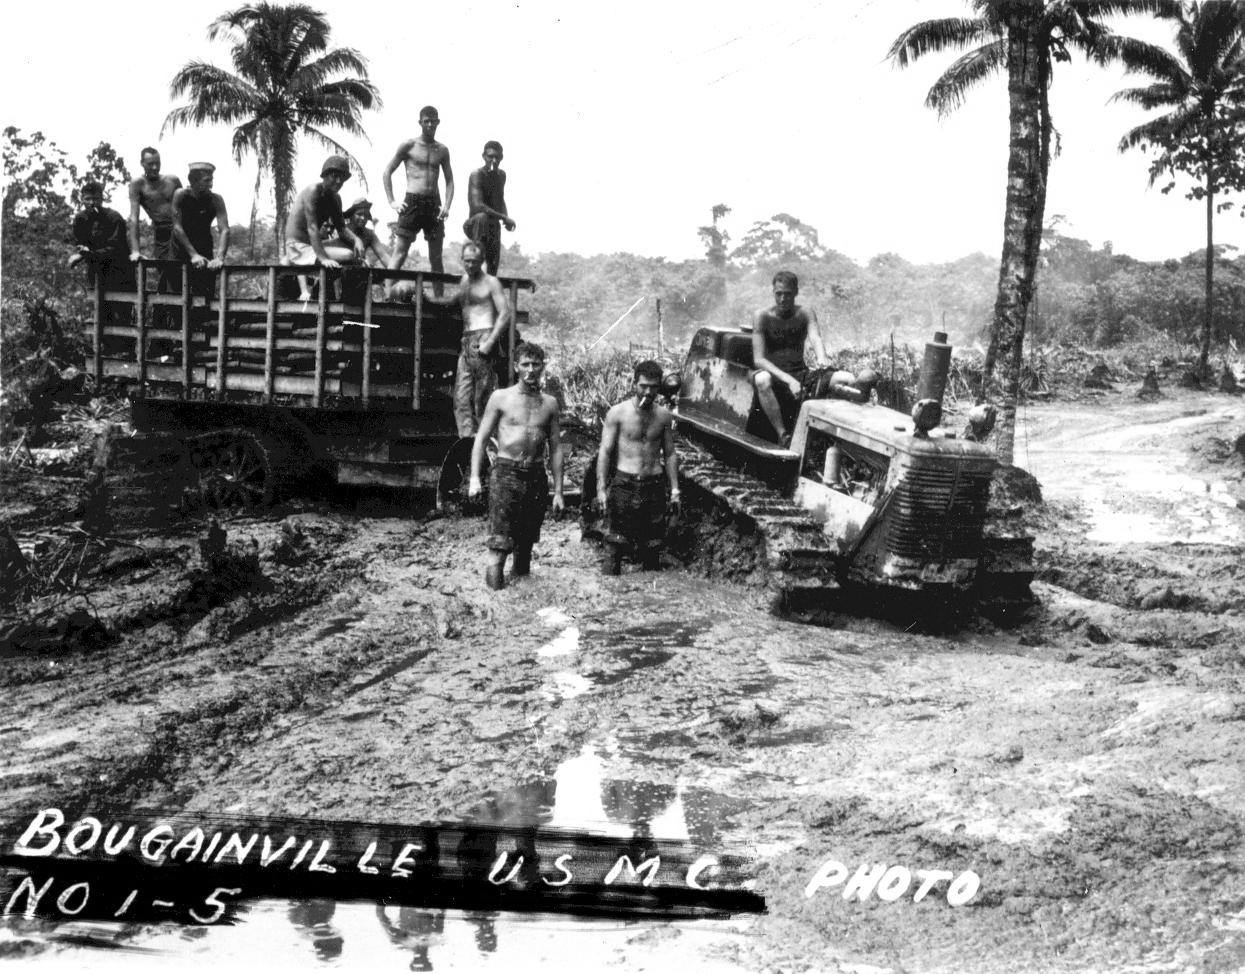 Heavy US Marine equipment, Bougainville, Solomon Islands, 1943-1944